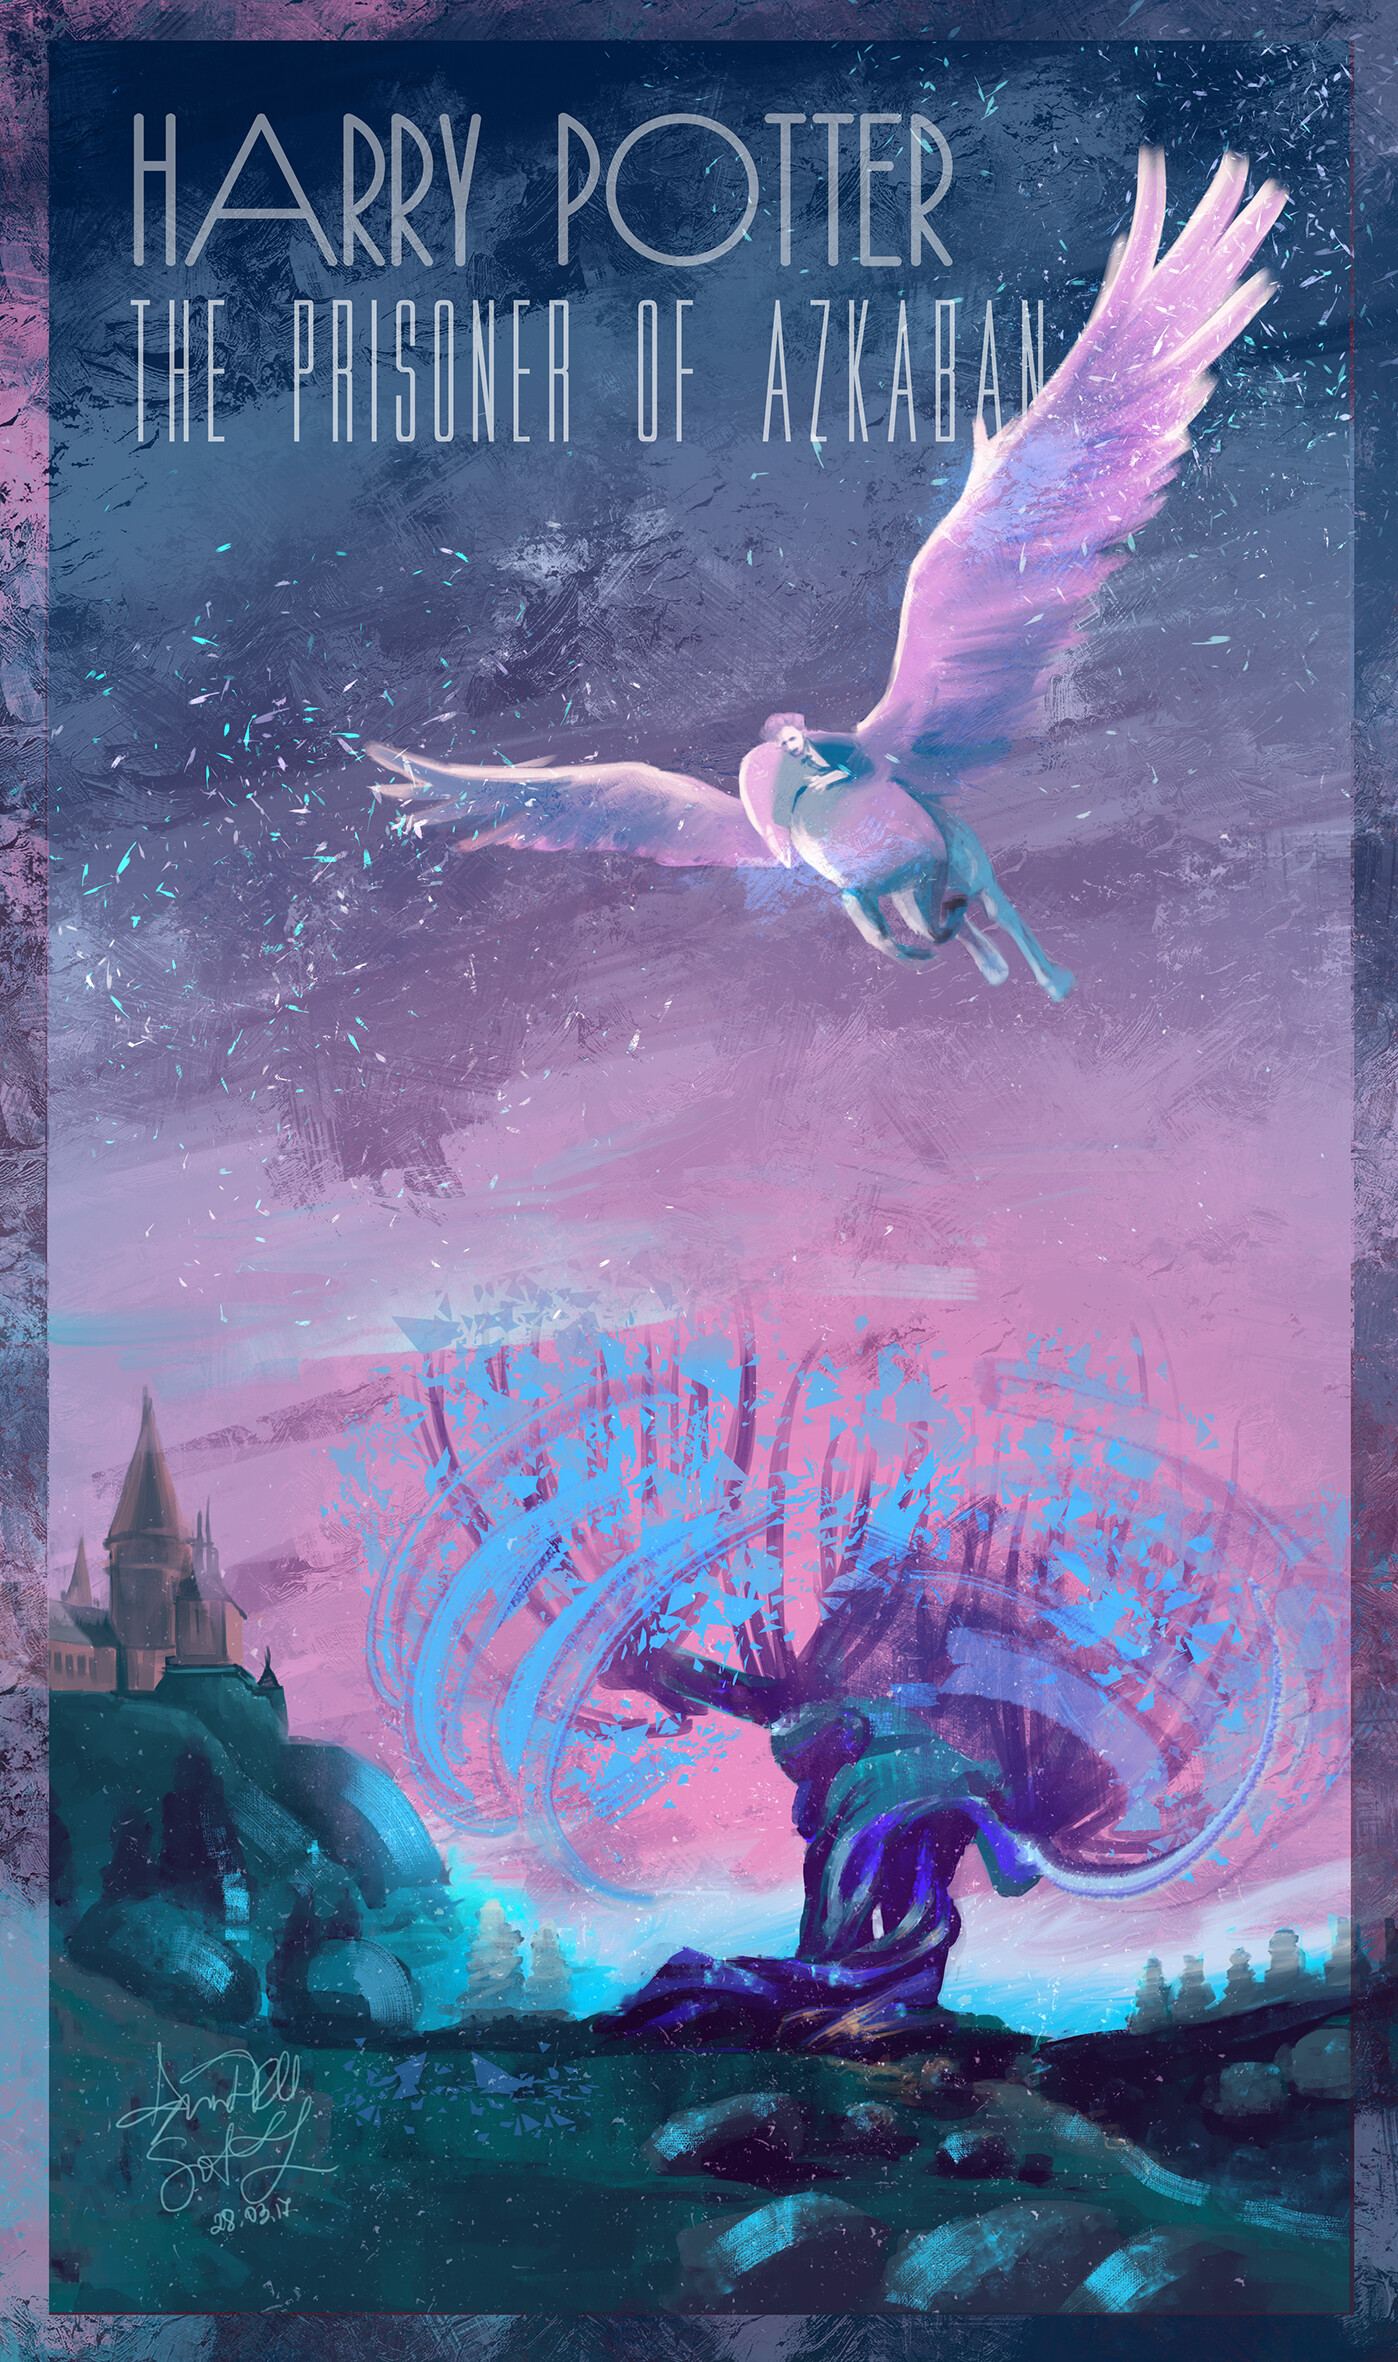 ArtStation - Harry Potter Promotional Posters